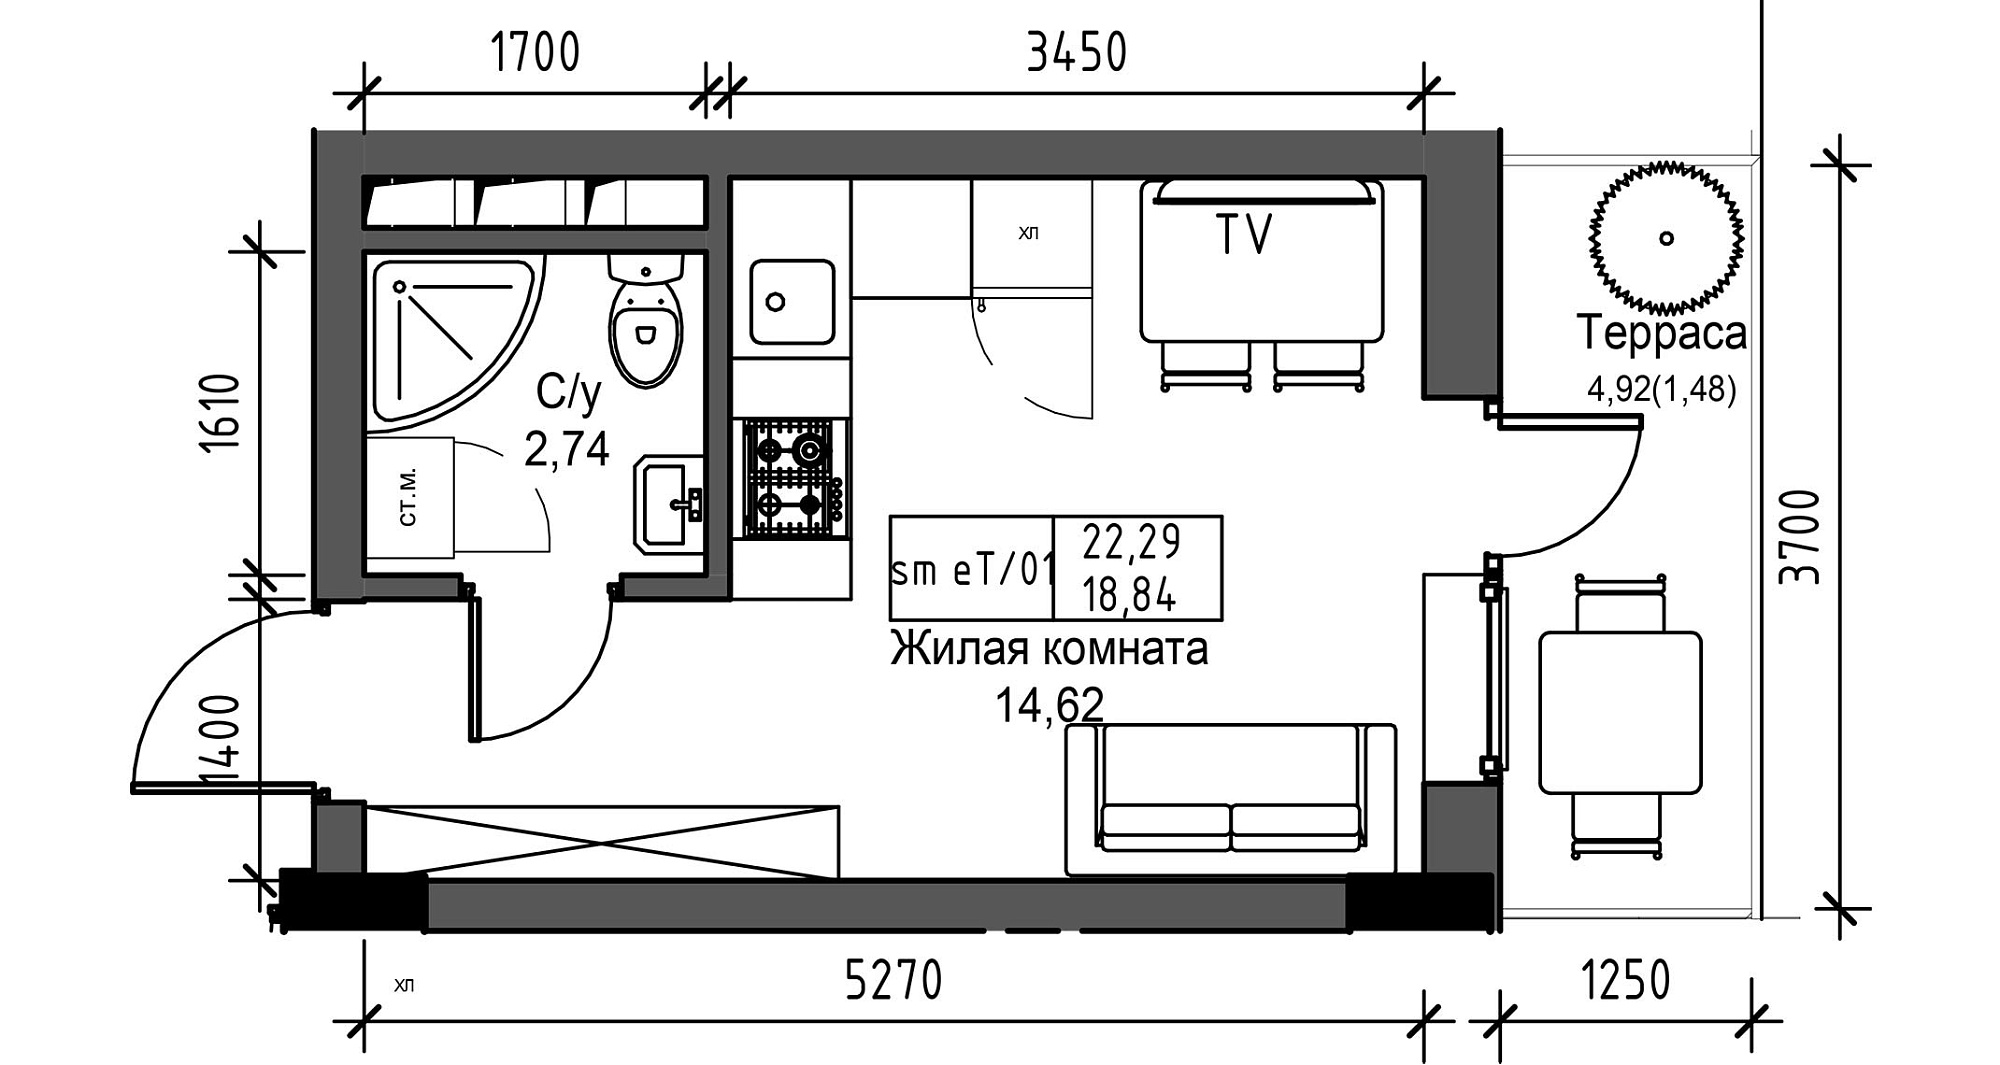 Планування Smart-квартира площею 18.84м2, UM-003-05/0040.